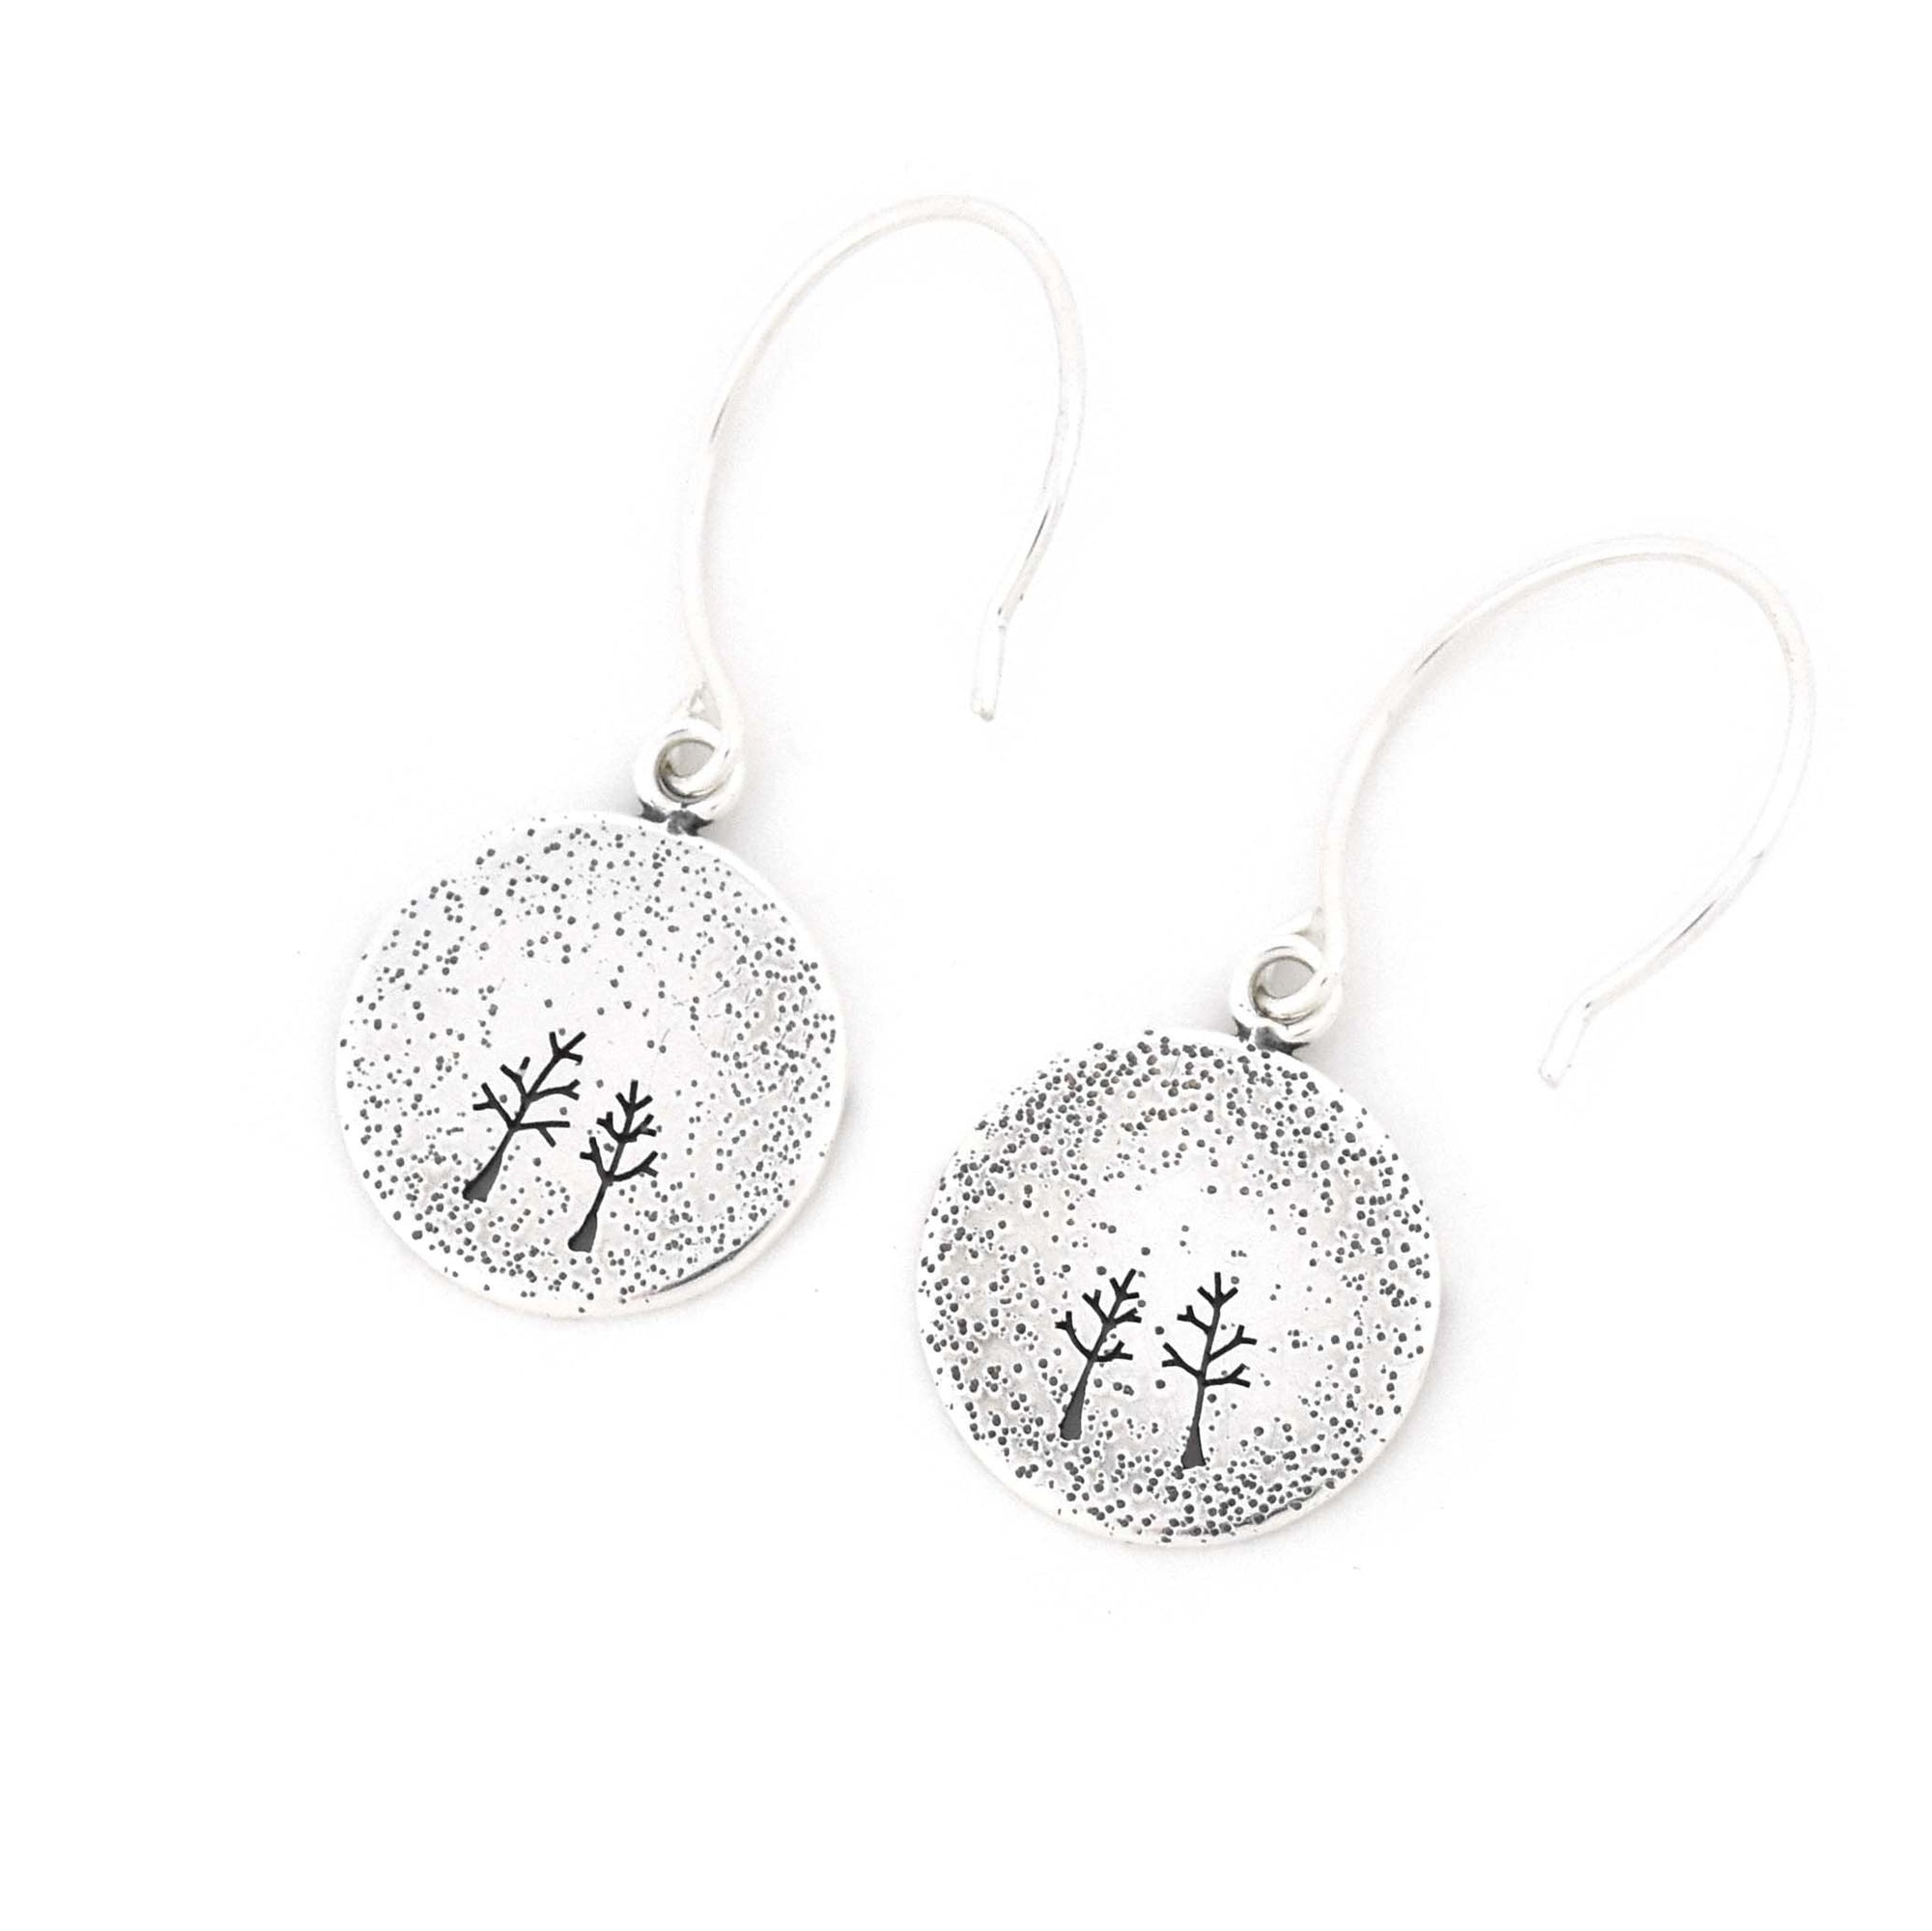 Eben Ice Caves Earrings - Silver Earrings   5669 - handmade by Beth Millner Jewelry